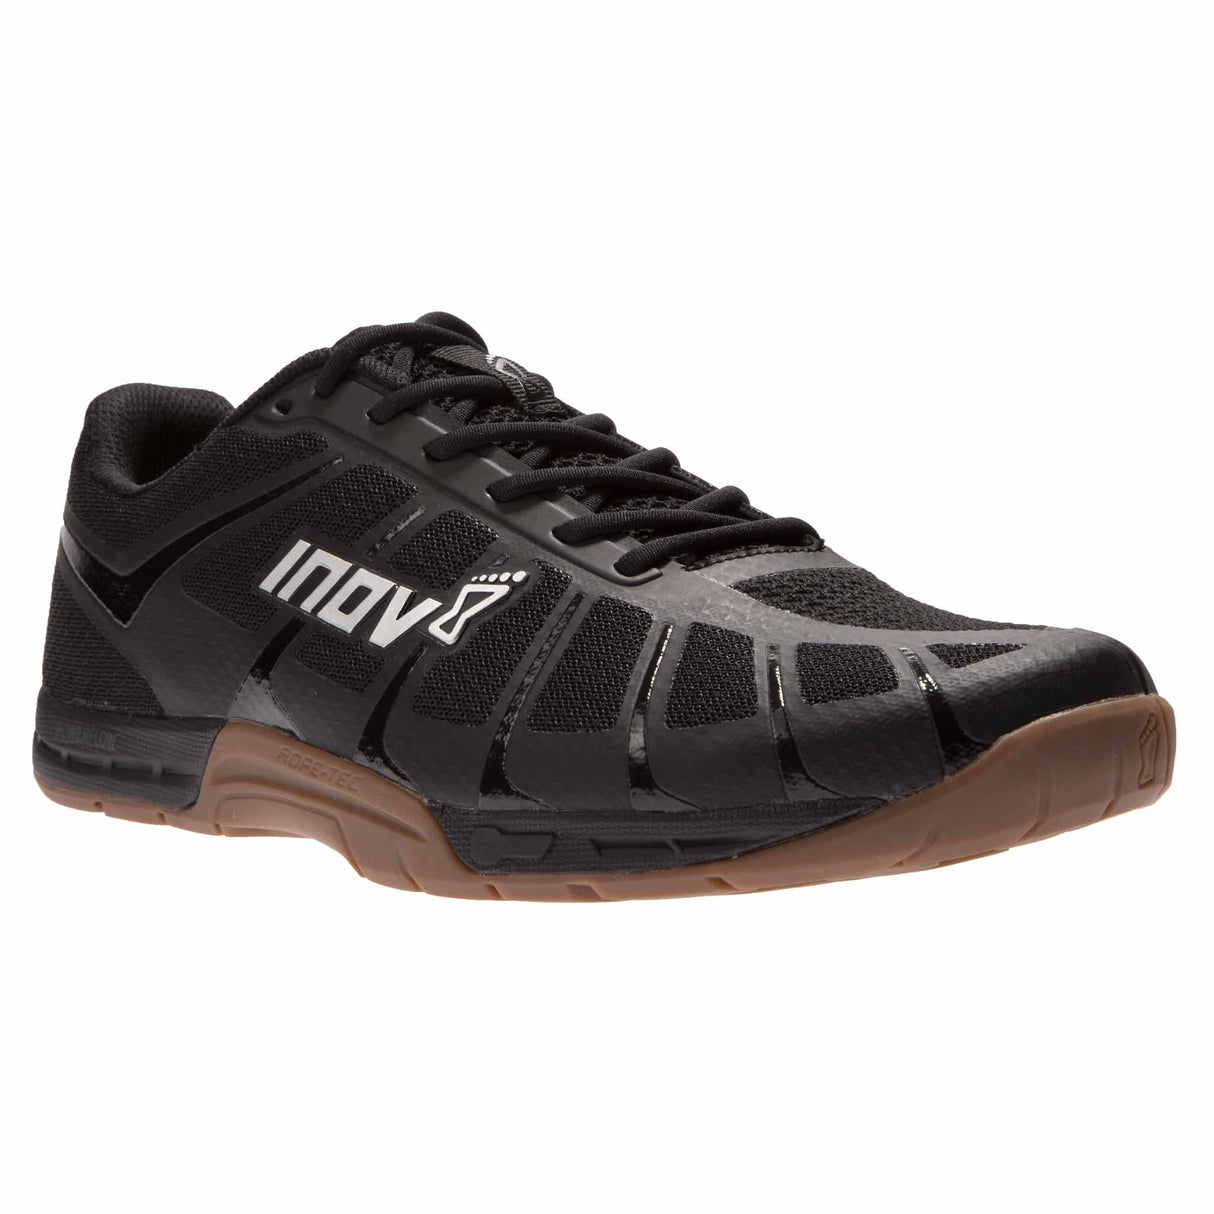 Inov-8 F-Lite 235 V3 Black Gum chaussures d'entrainement pour homme angle